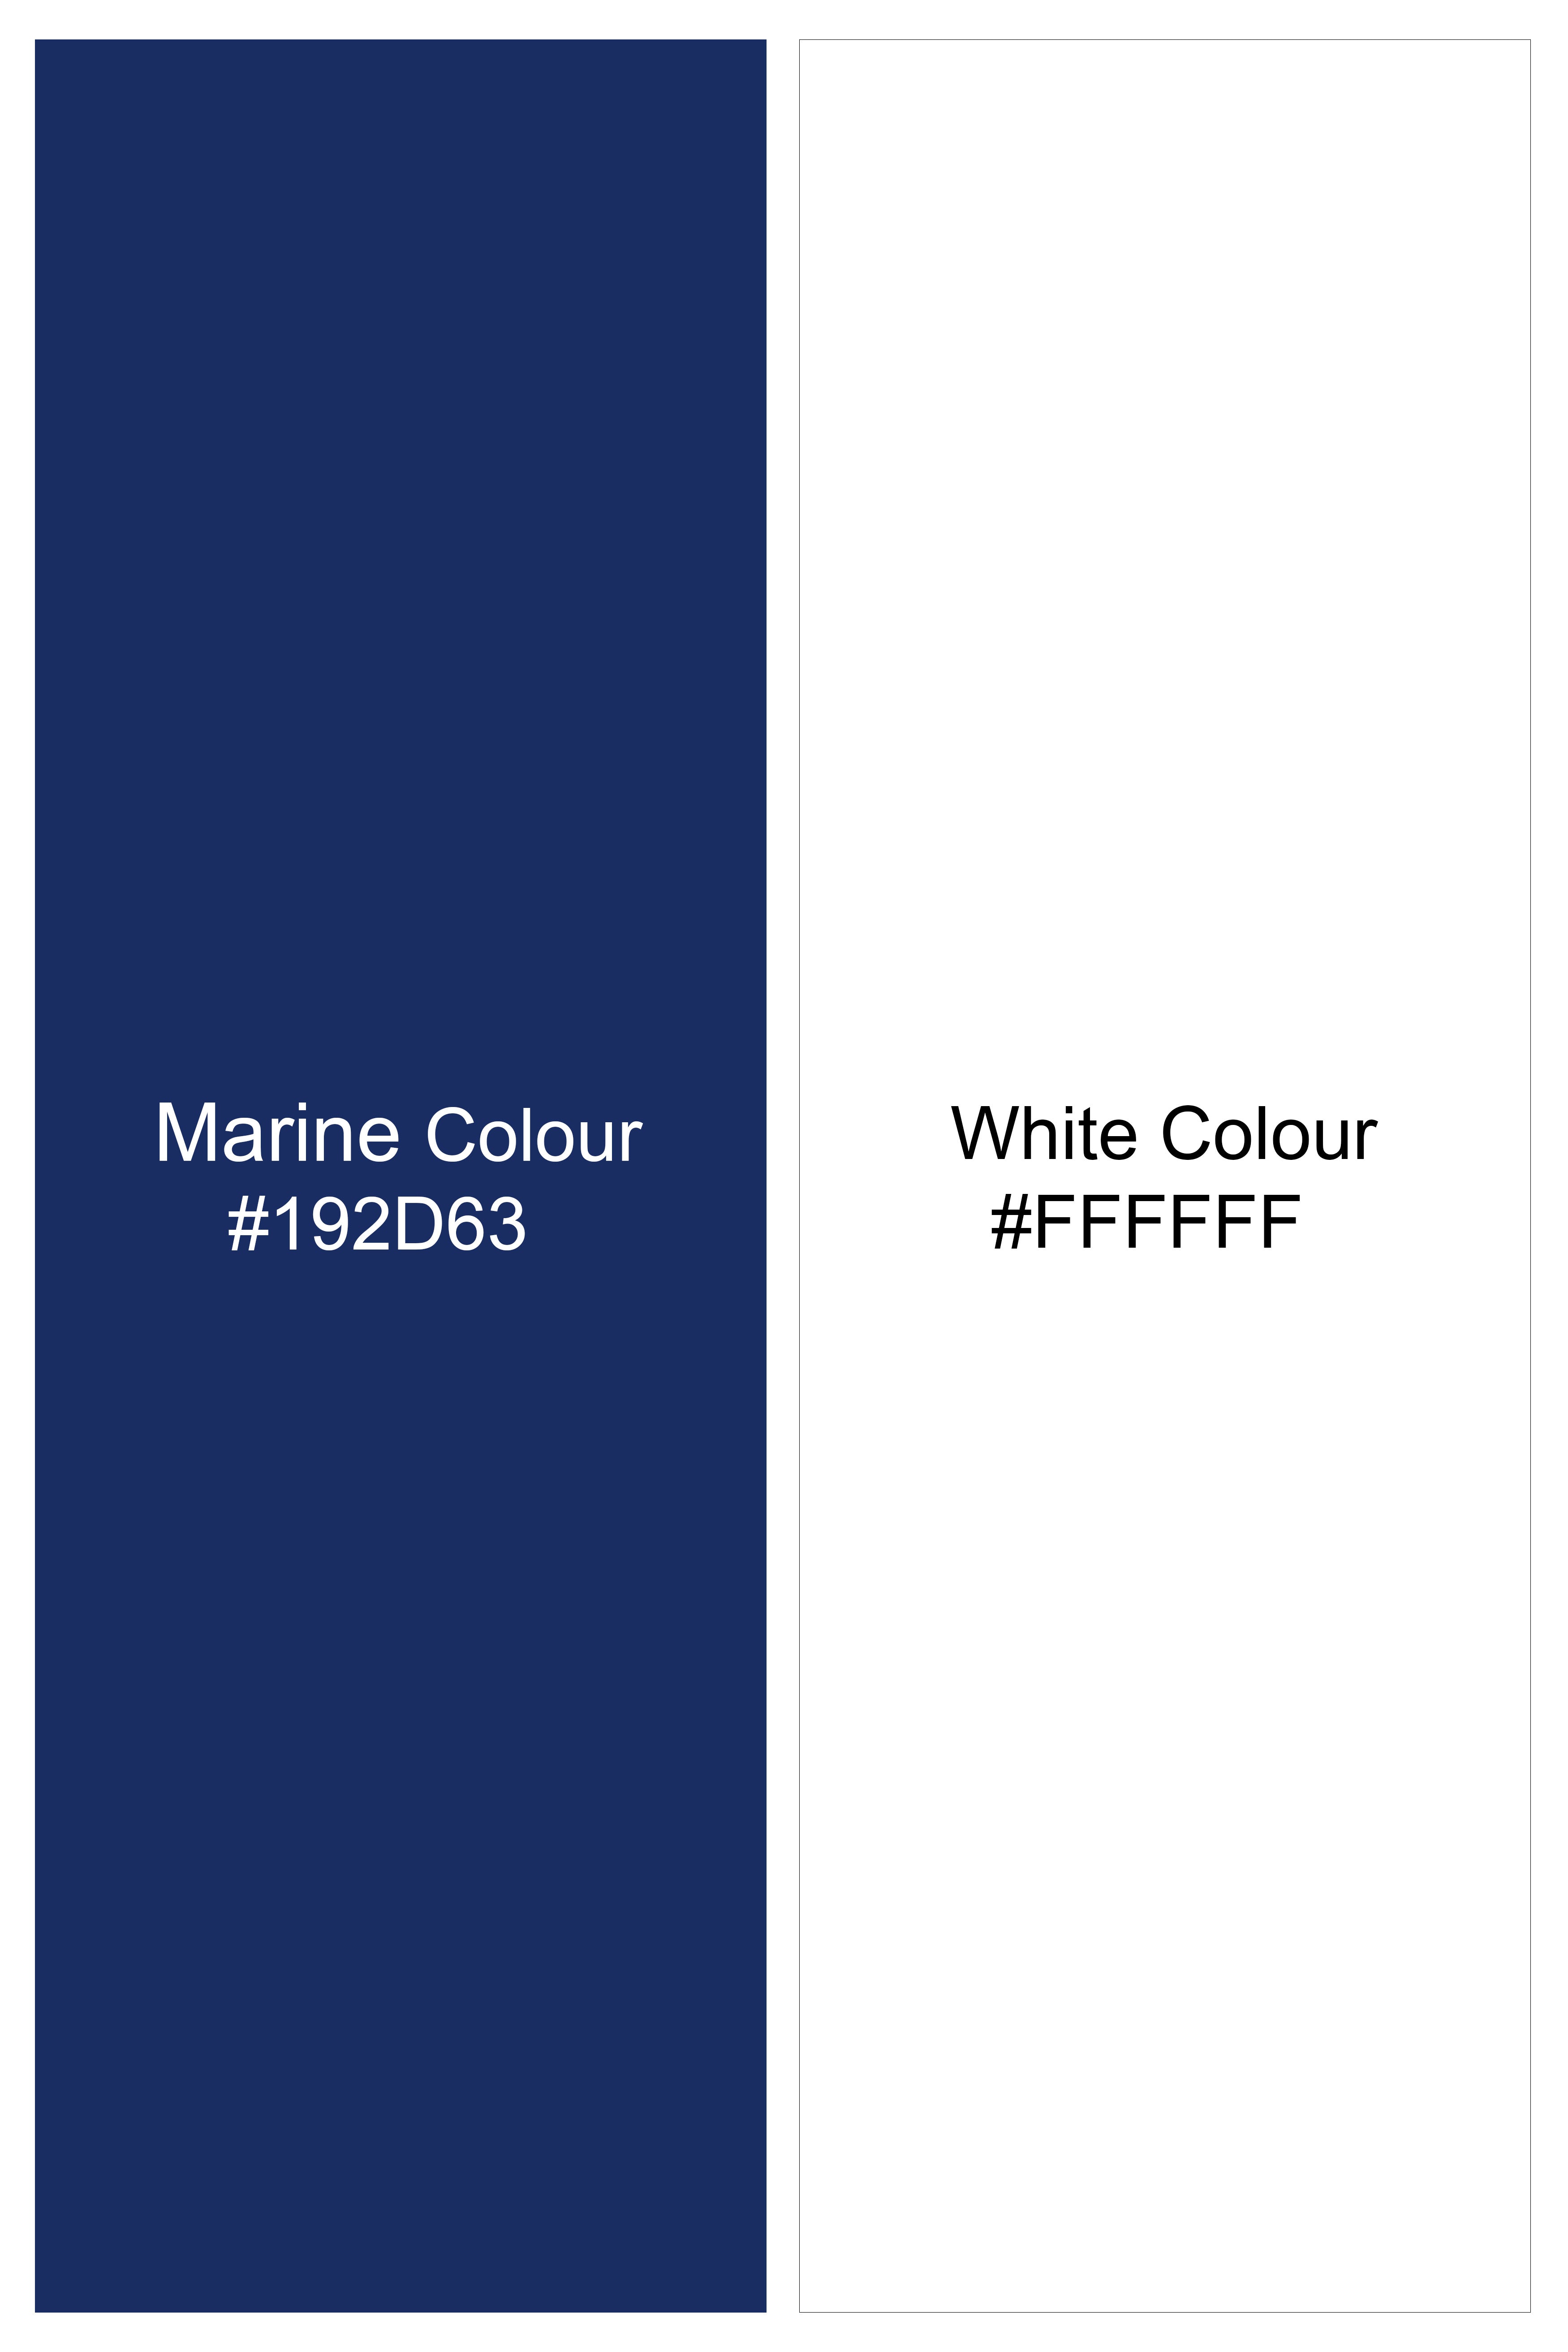 Marine Blue and White Windowpane Wool Rich Double Breasted Suit ST3095-DB-36, ST3095-DB-38, ST3095-DB-40, ST3095-DB-42, ST3095-DB-44, ST3095-DB-46, ST3095-DB-48, ST3095-DB-50, ST3095-DB-52, ST3095-DB-54, ST3095-DB-56, ST3095-DB-58, ST3095-DB-60